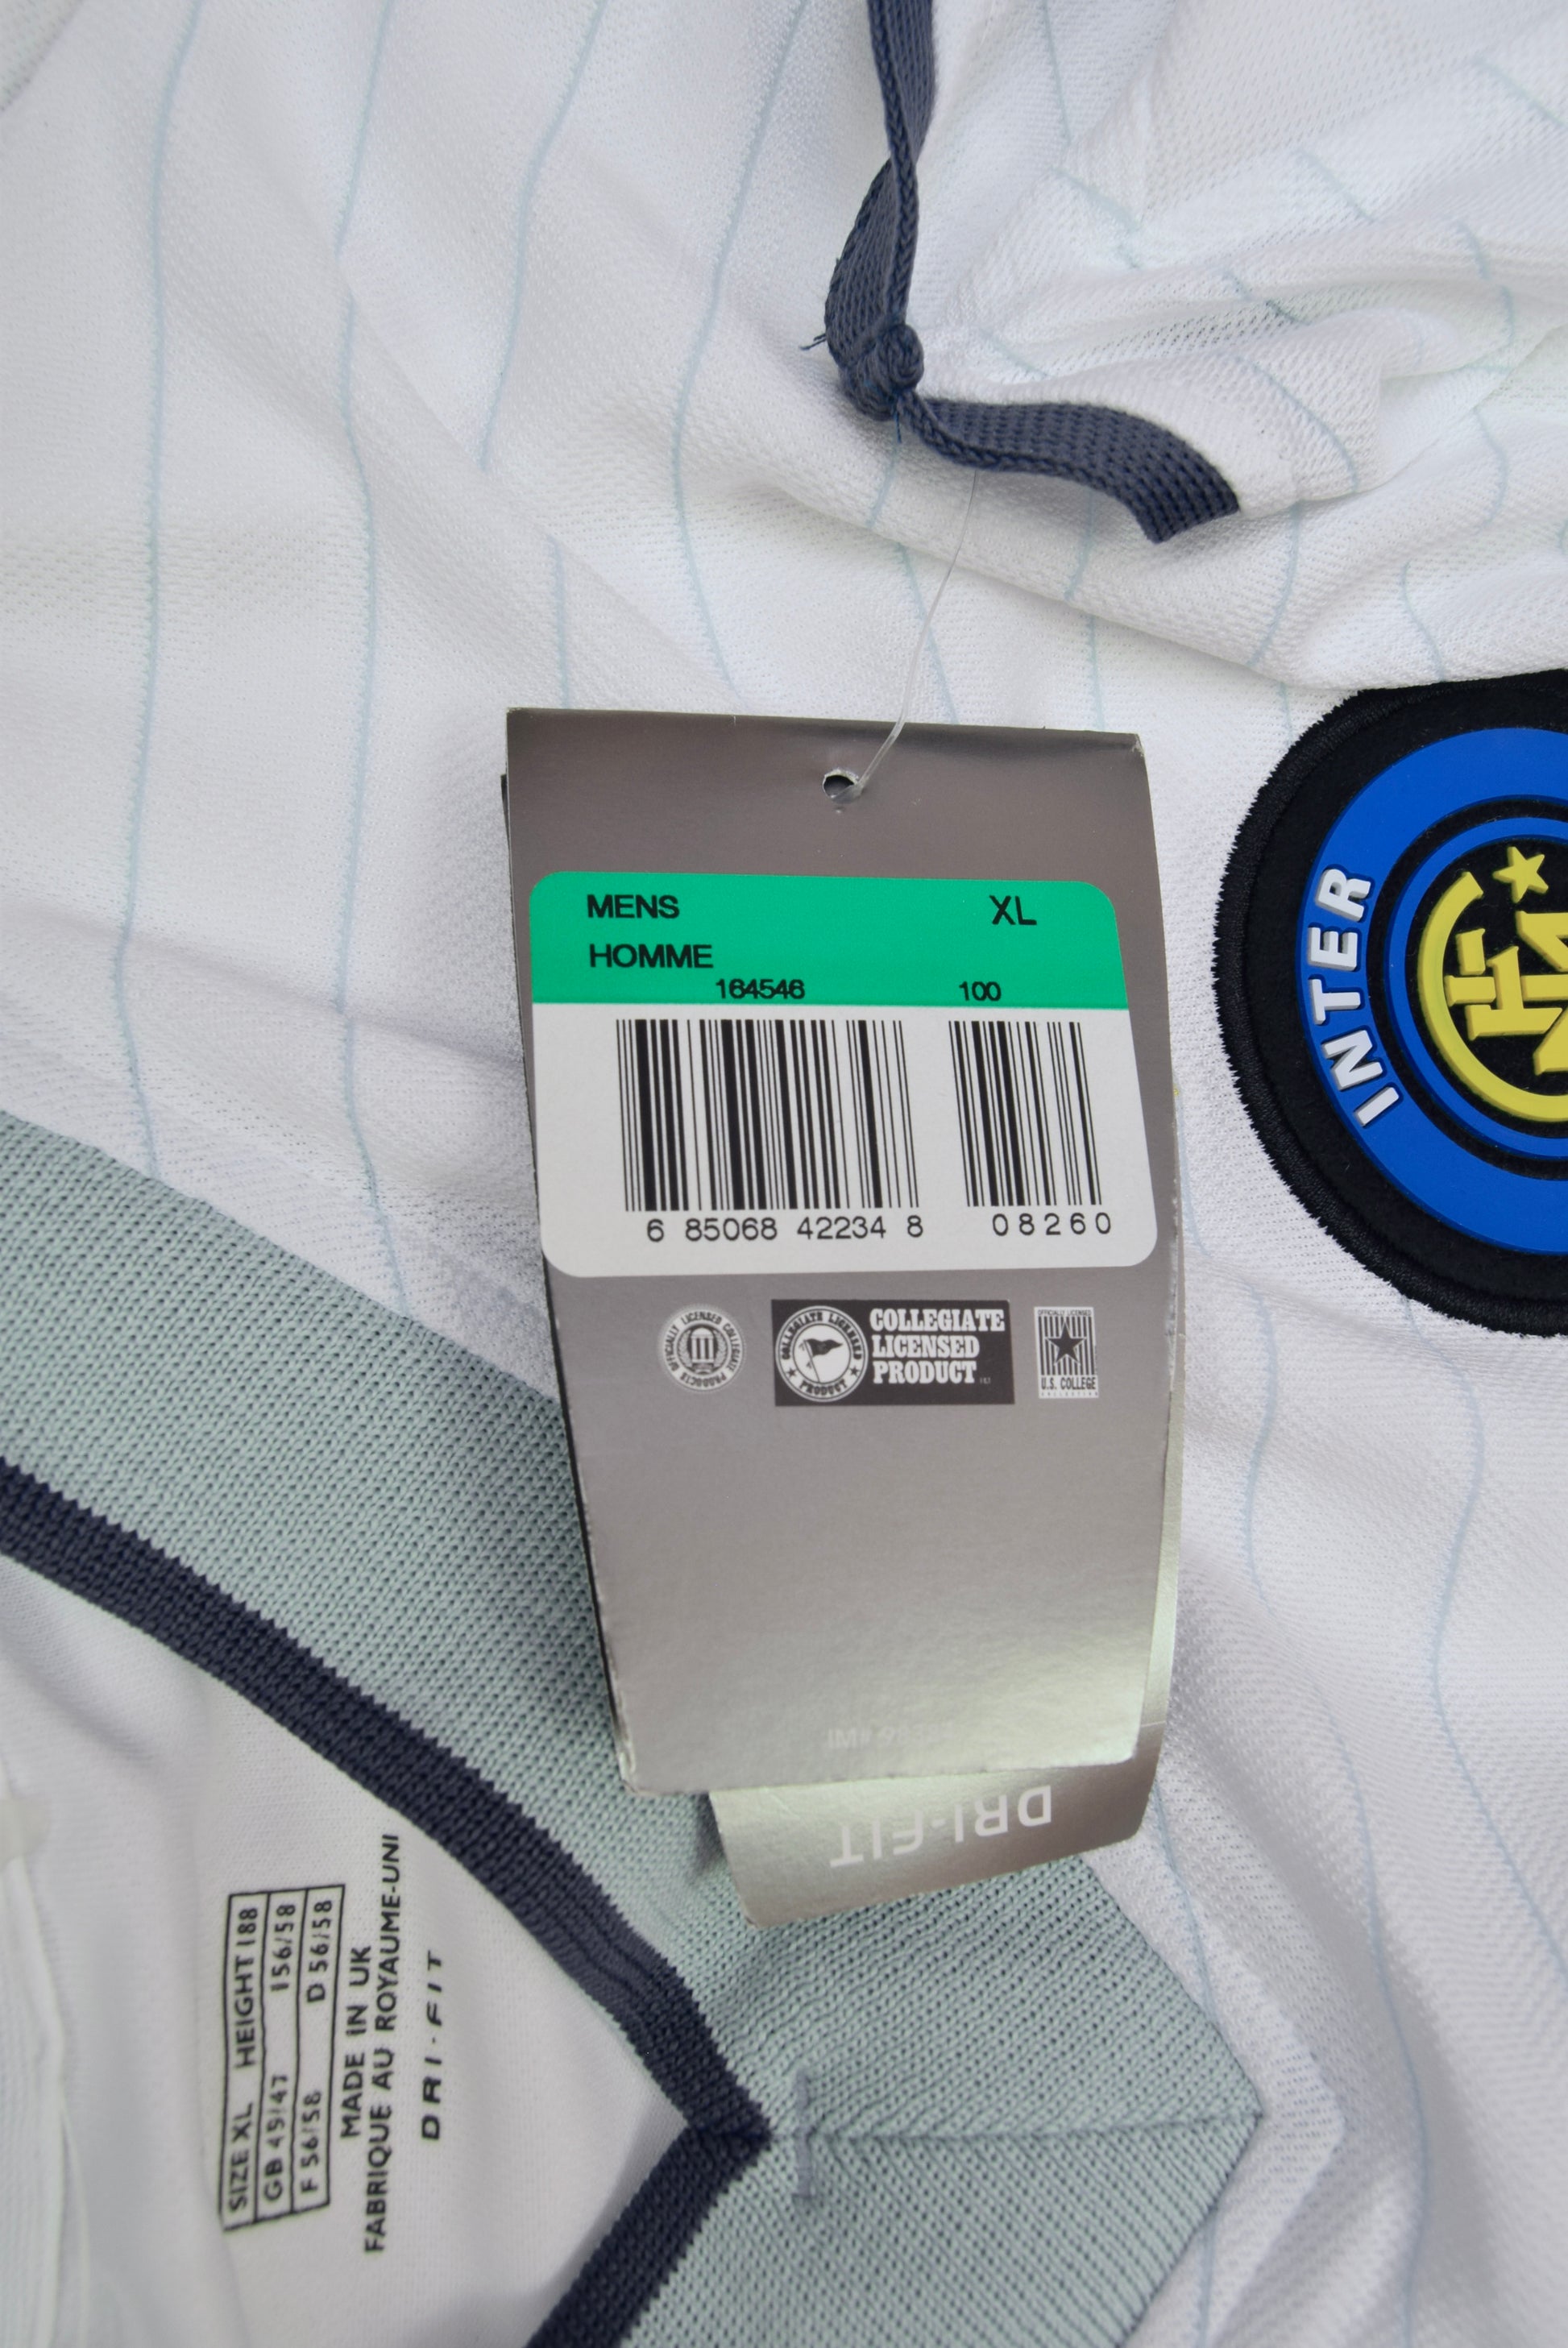 Inter Internazionale Milano Milan Nike 2000-2001 Away Football Shirt White Pirelli Size XL Made in UK BNWT NOS OG DS